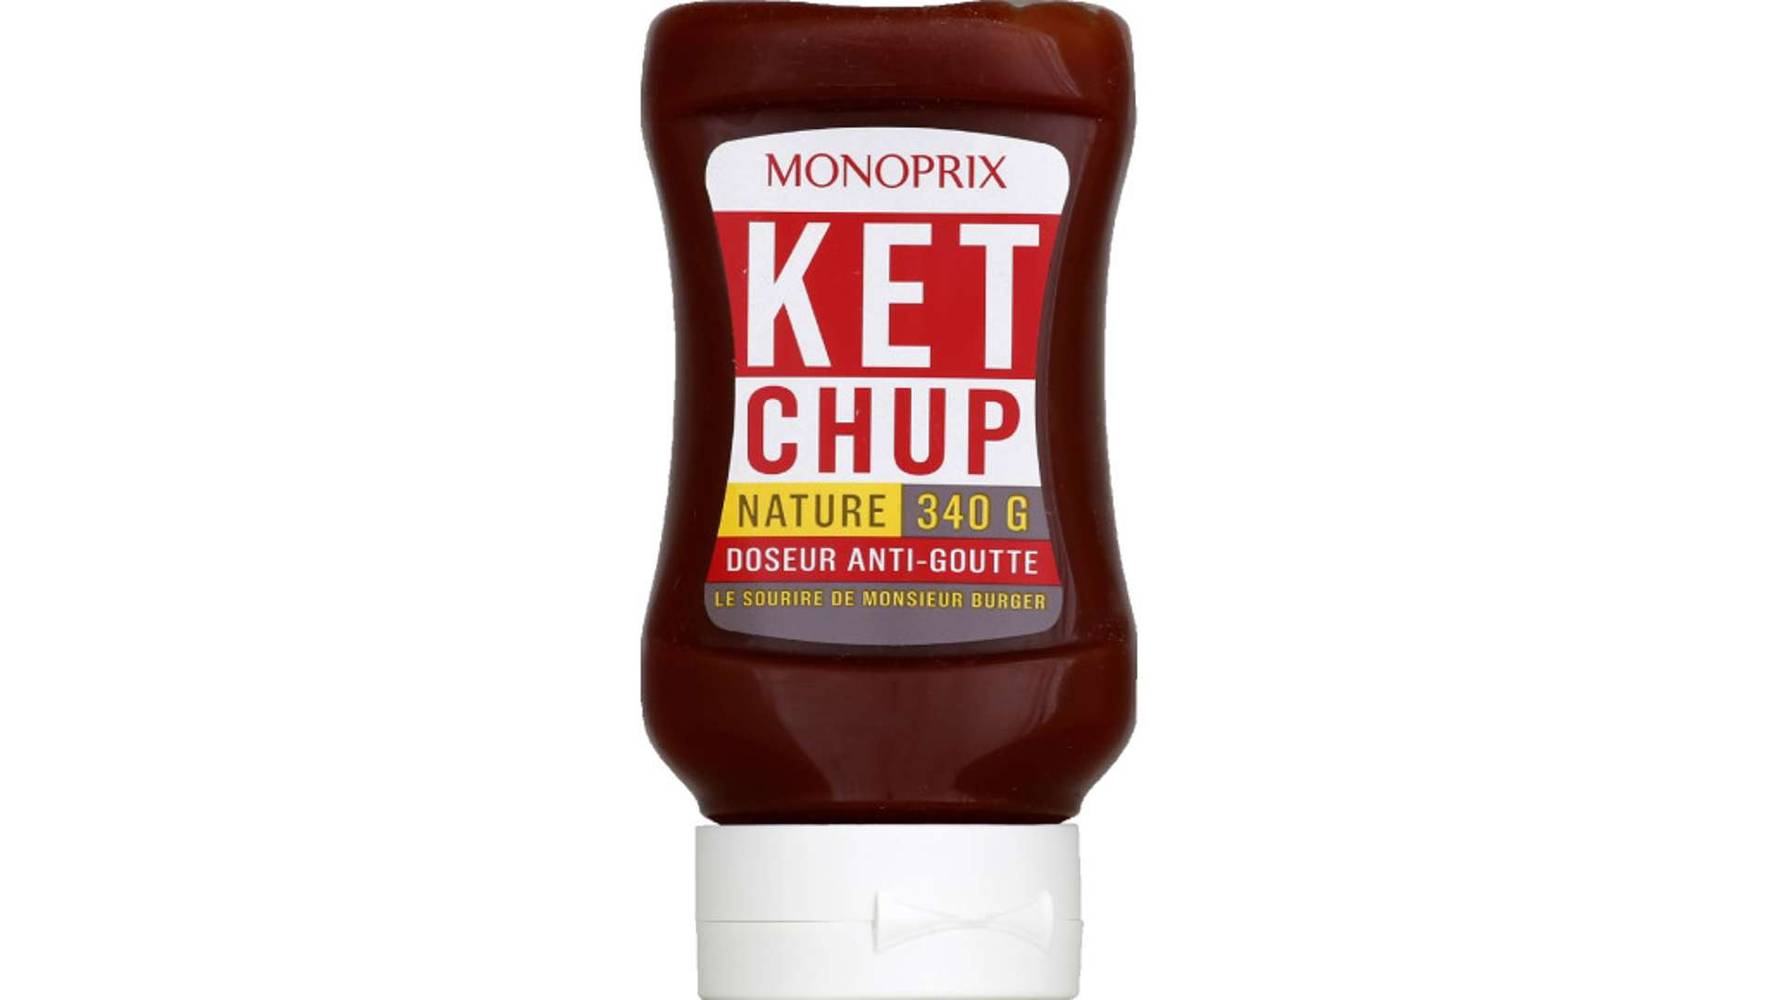 Monoprix Ketchup Nature Le flacon de 340g